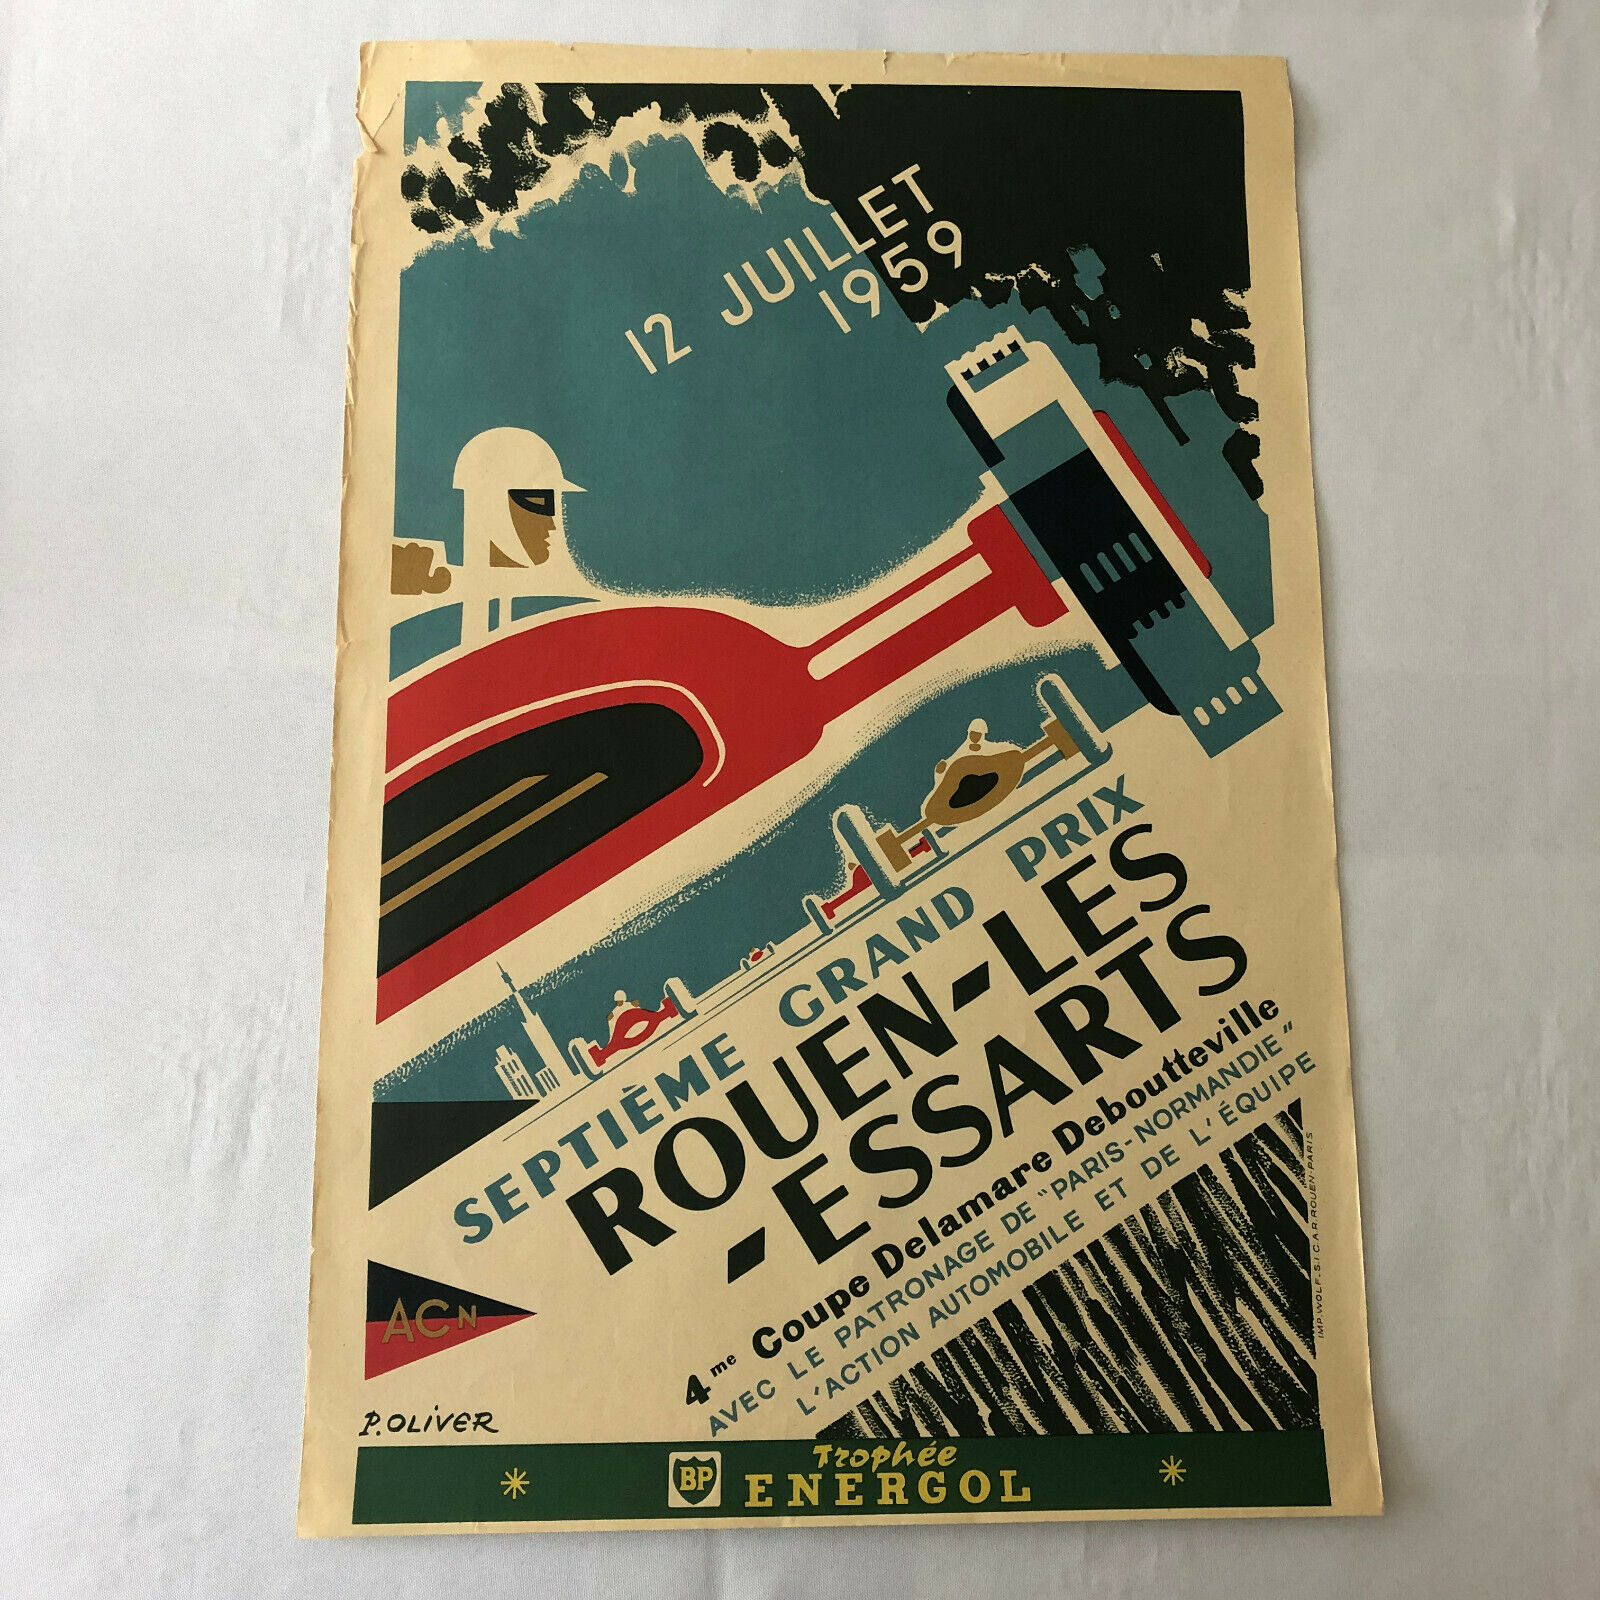 1959 Rouen Les Essarts Grand Prix Car Racing Event Poster - Authentic Original